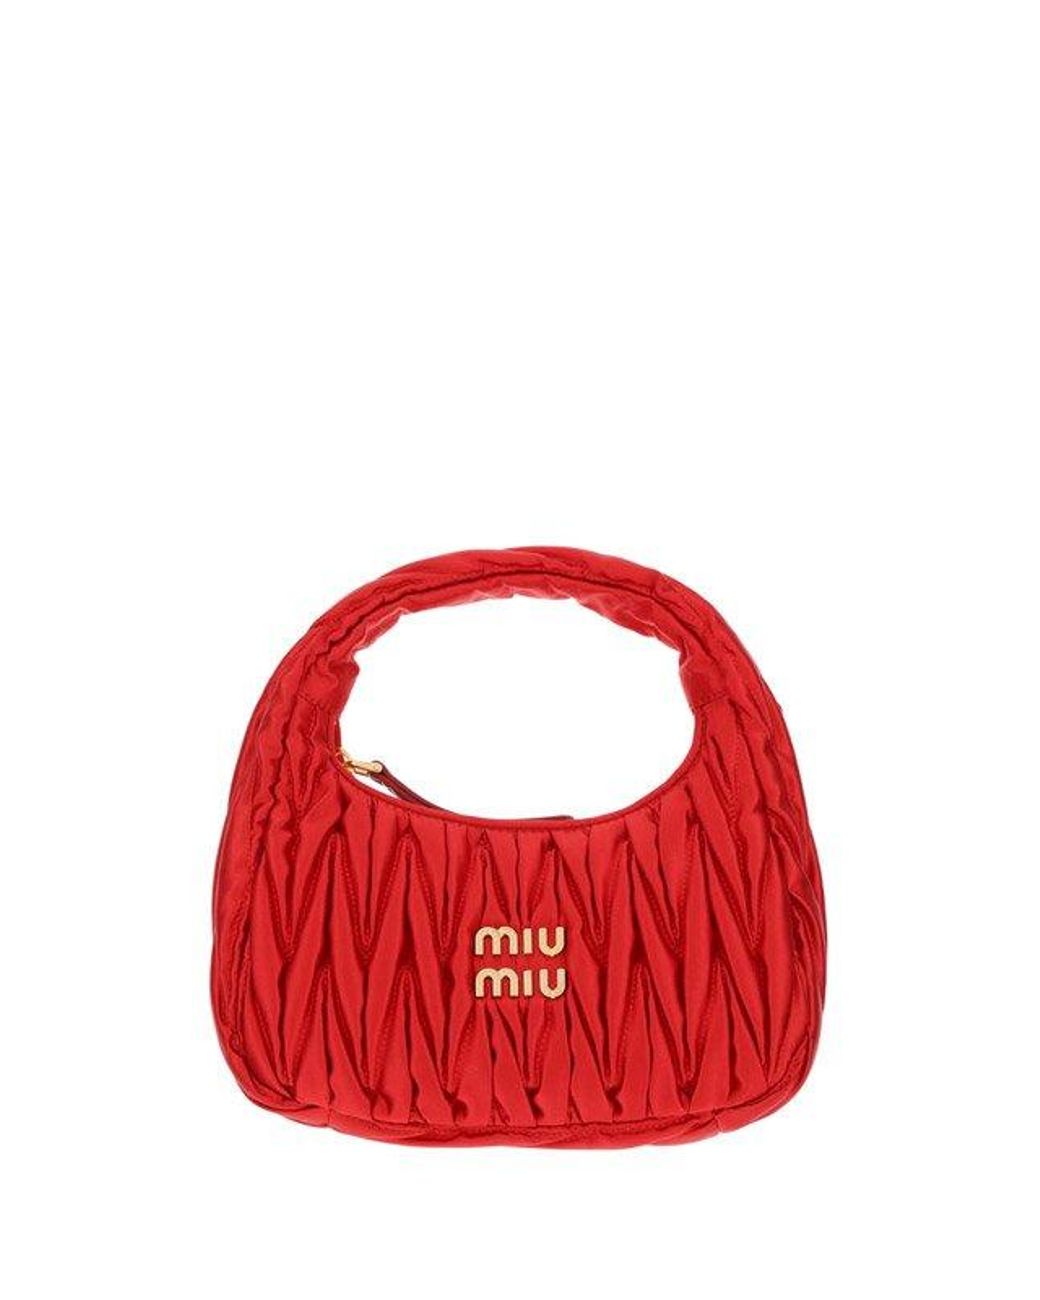 Miu Miu Wander Matelassé Zipped Mini Tote Bag in Red | Lyst